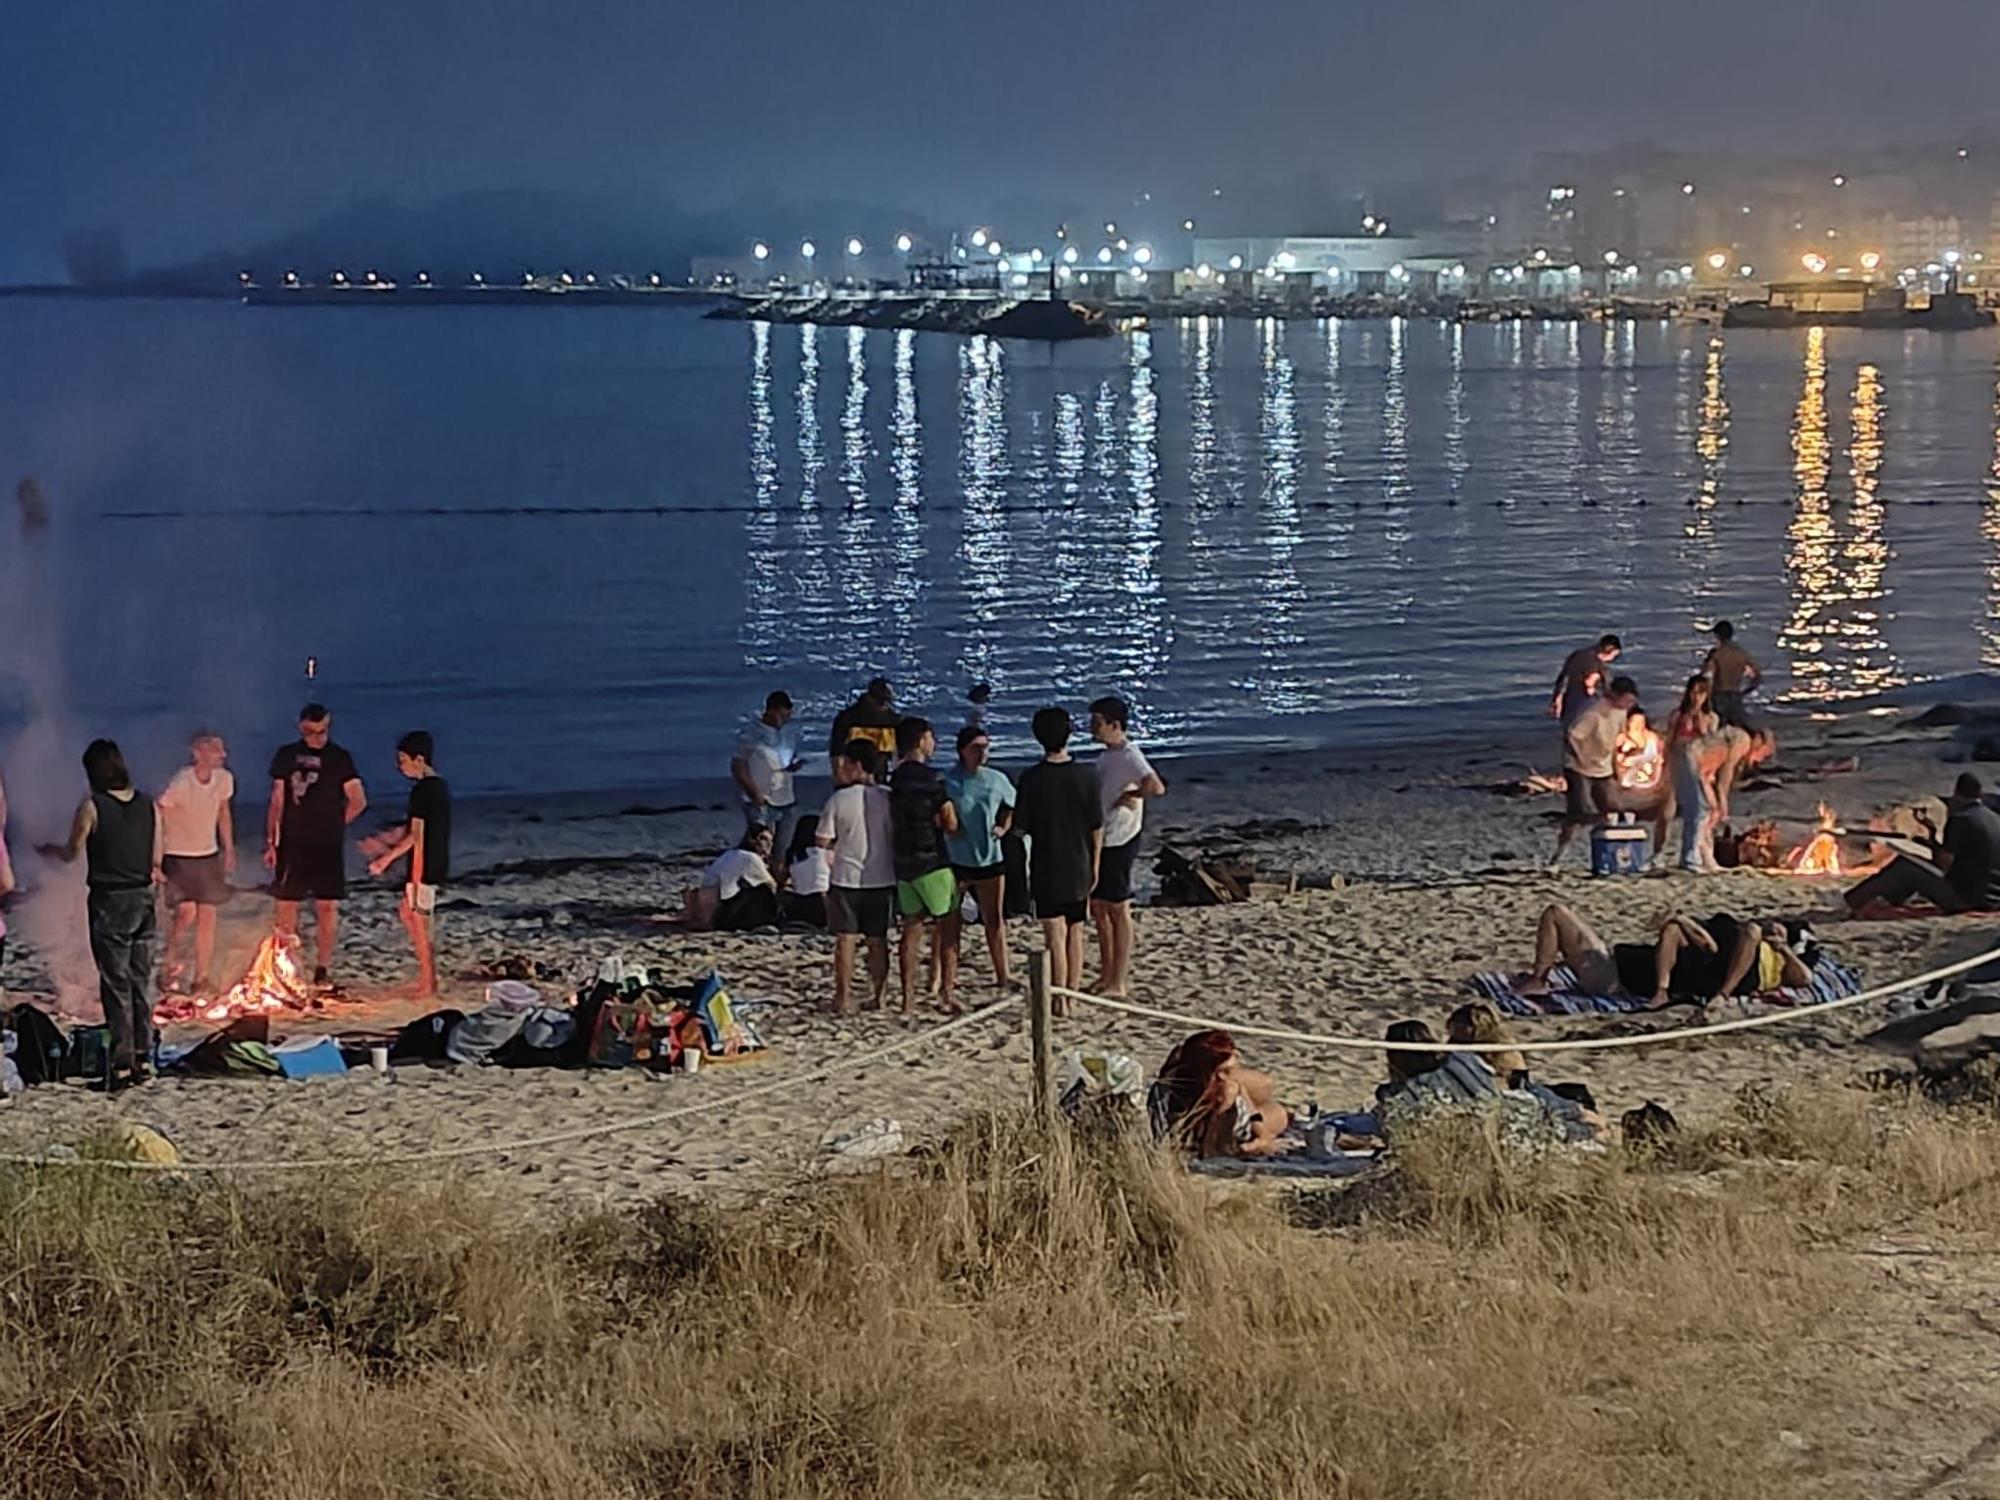 La noche de San Xoán en la céntrica playa de Rodeira, en Cangas